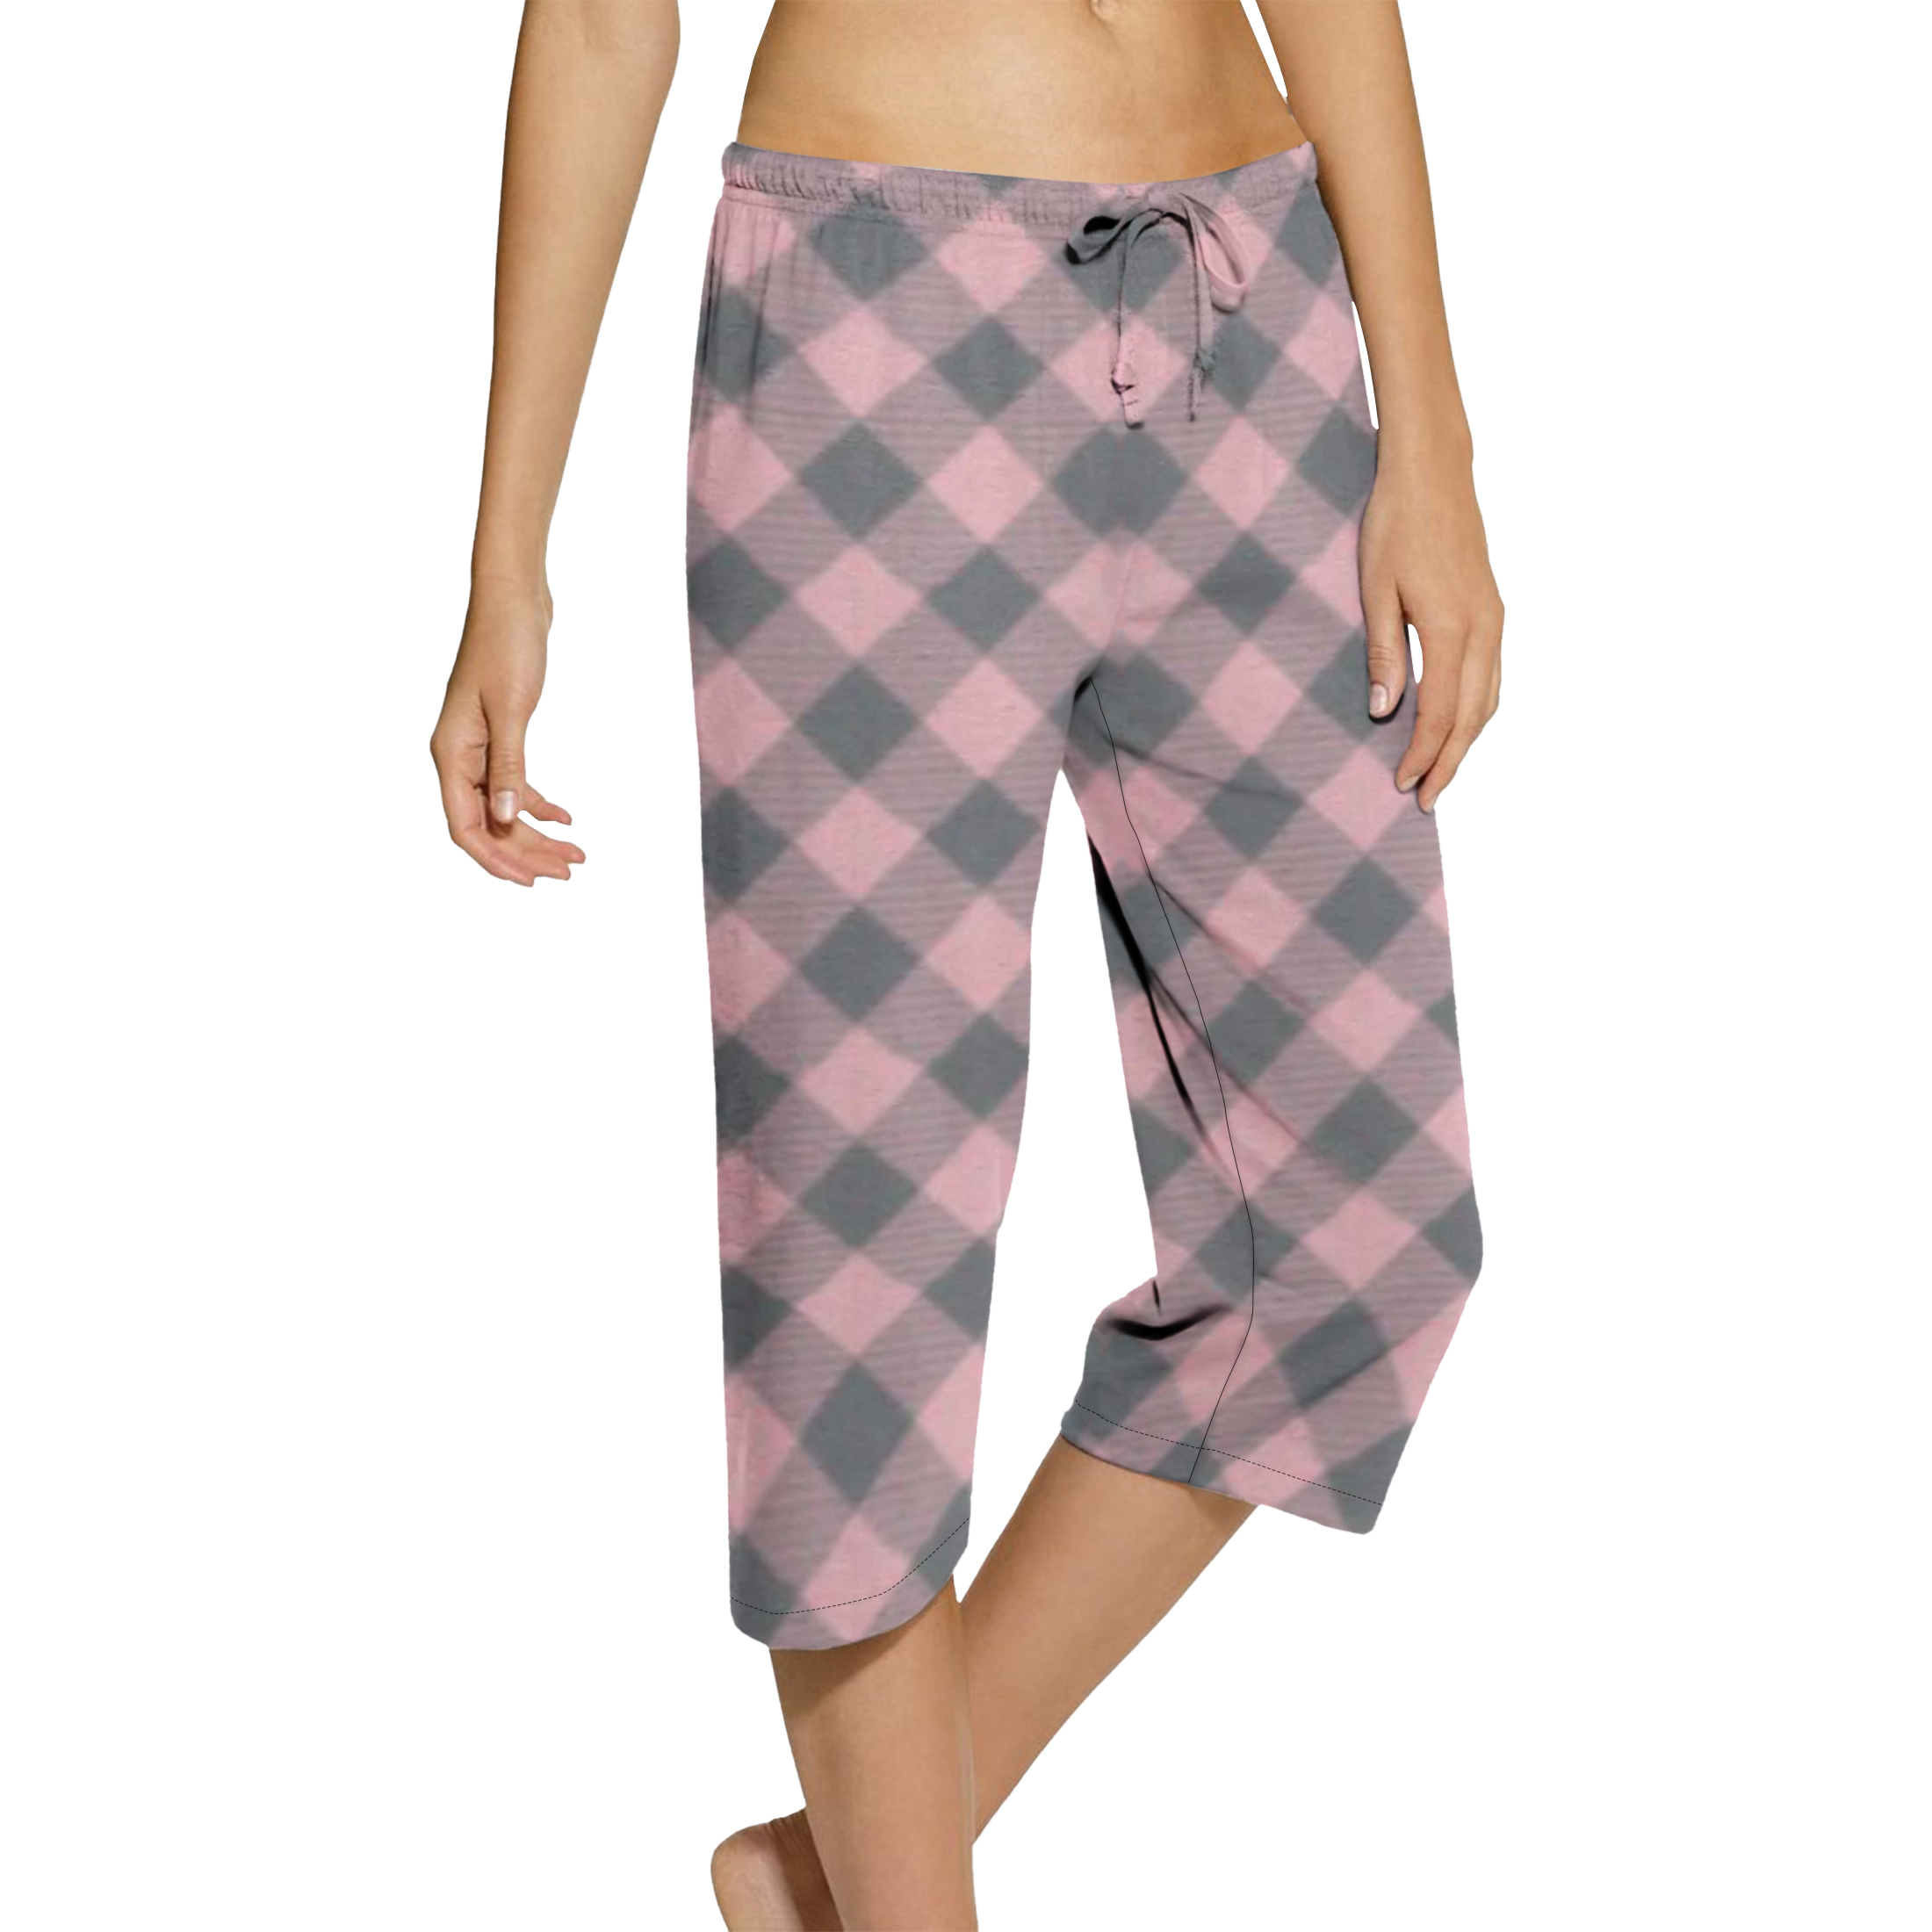 3-Pack: Ladies Printed Pajama Bottoms Capri Pants Sleepwear With Drawstring - Small